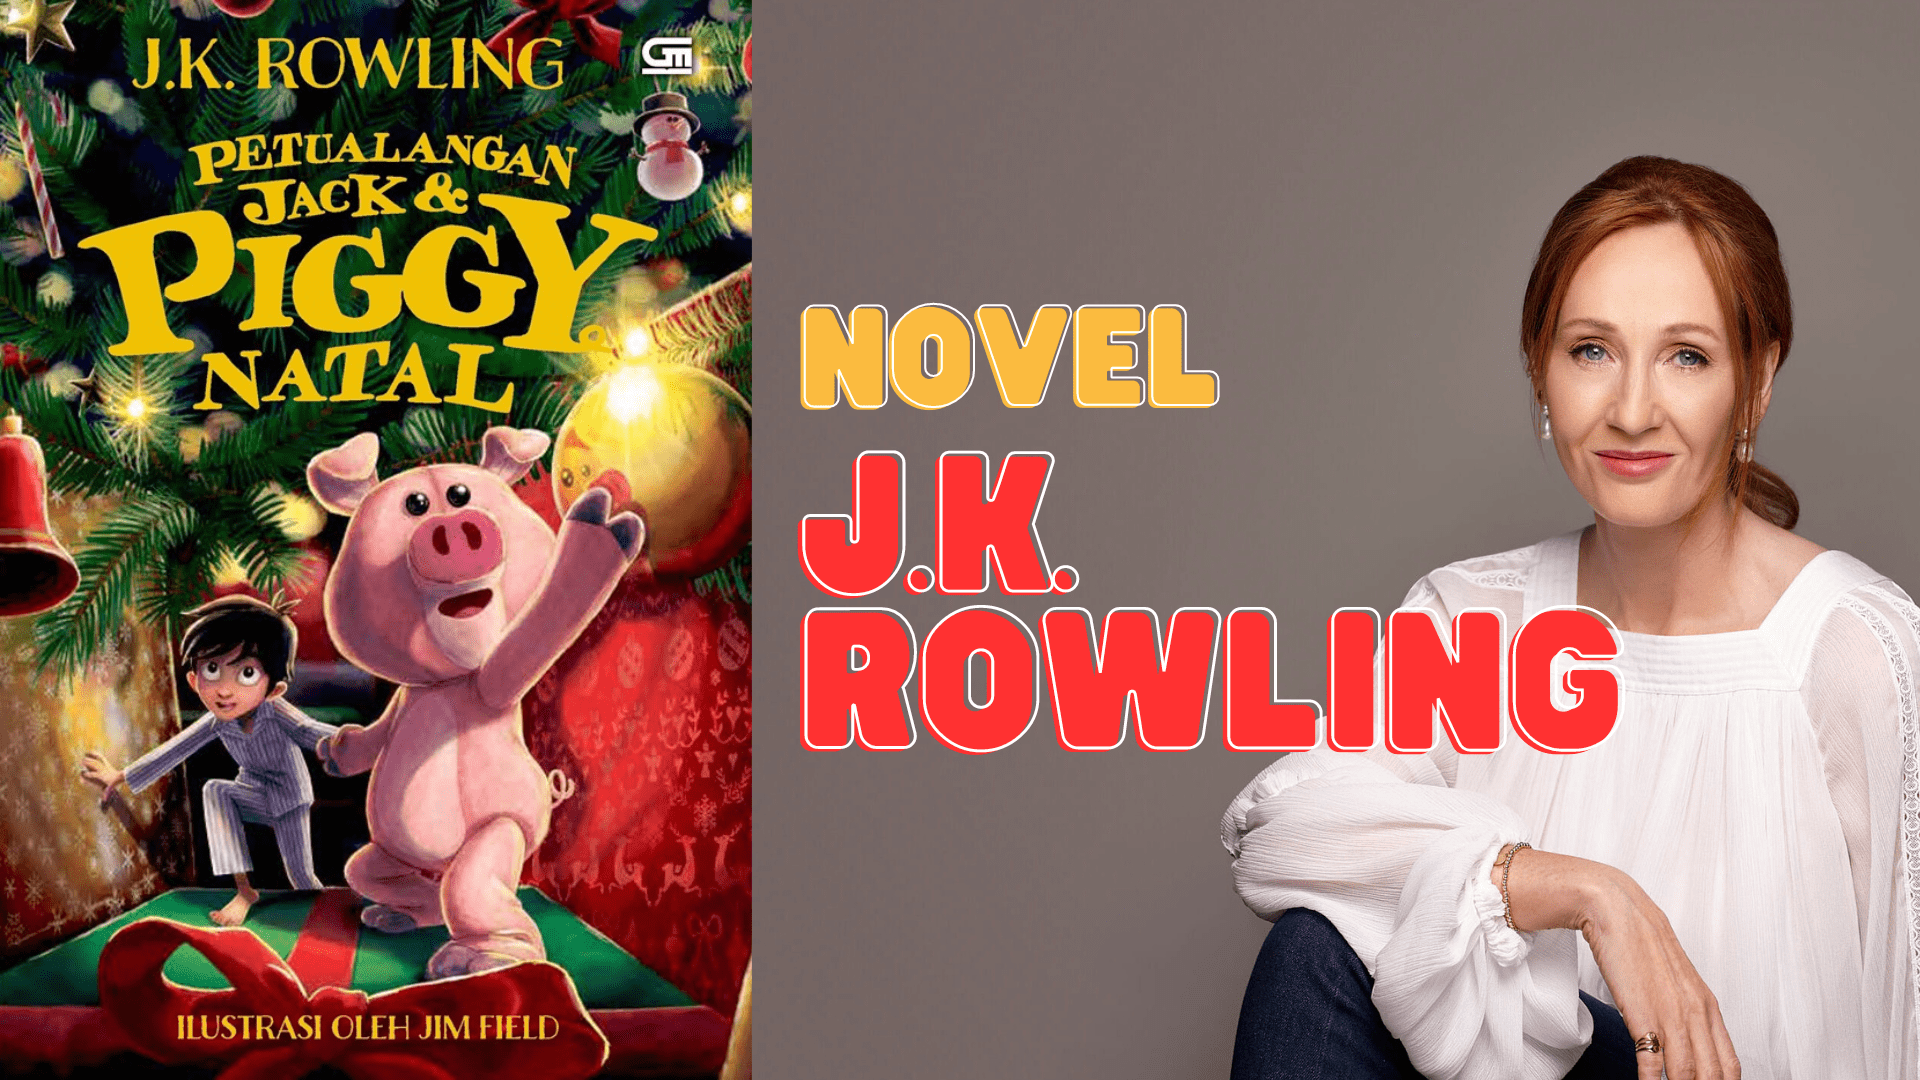 Petualangan Jack dan Piggy Natal, Kisah Seru Anak Kecil dan Mainan Favoritnya Karya J.K. Rowling